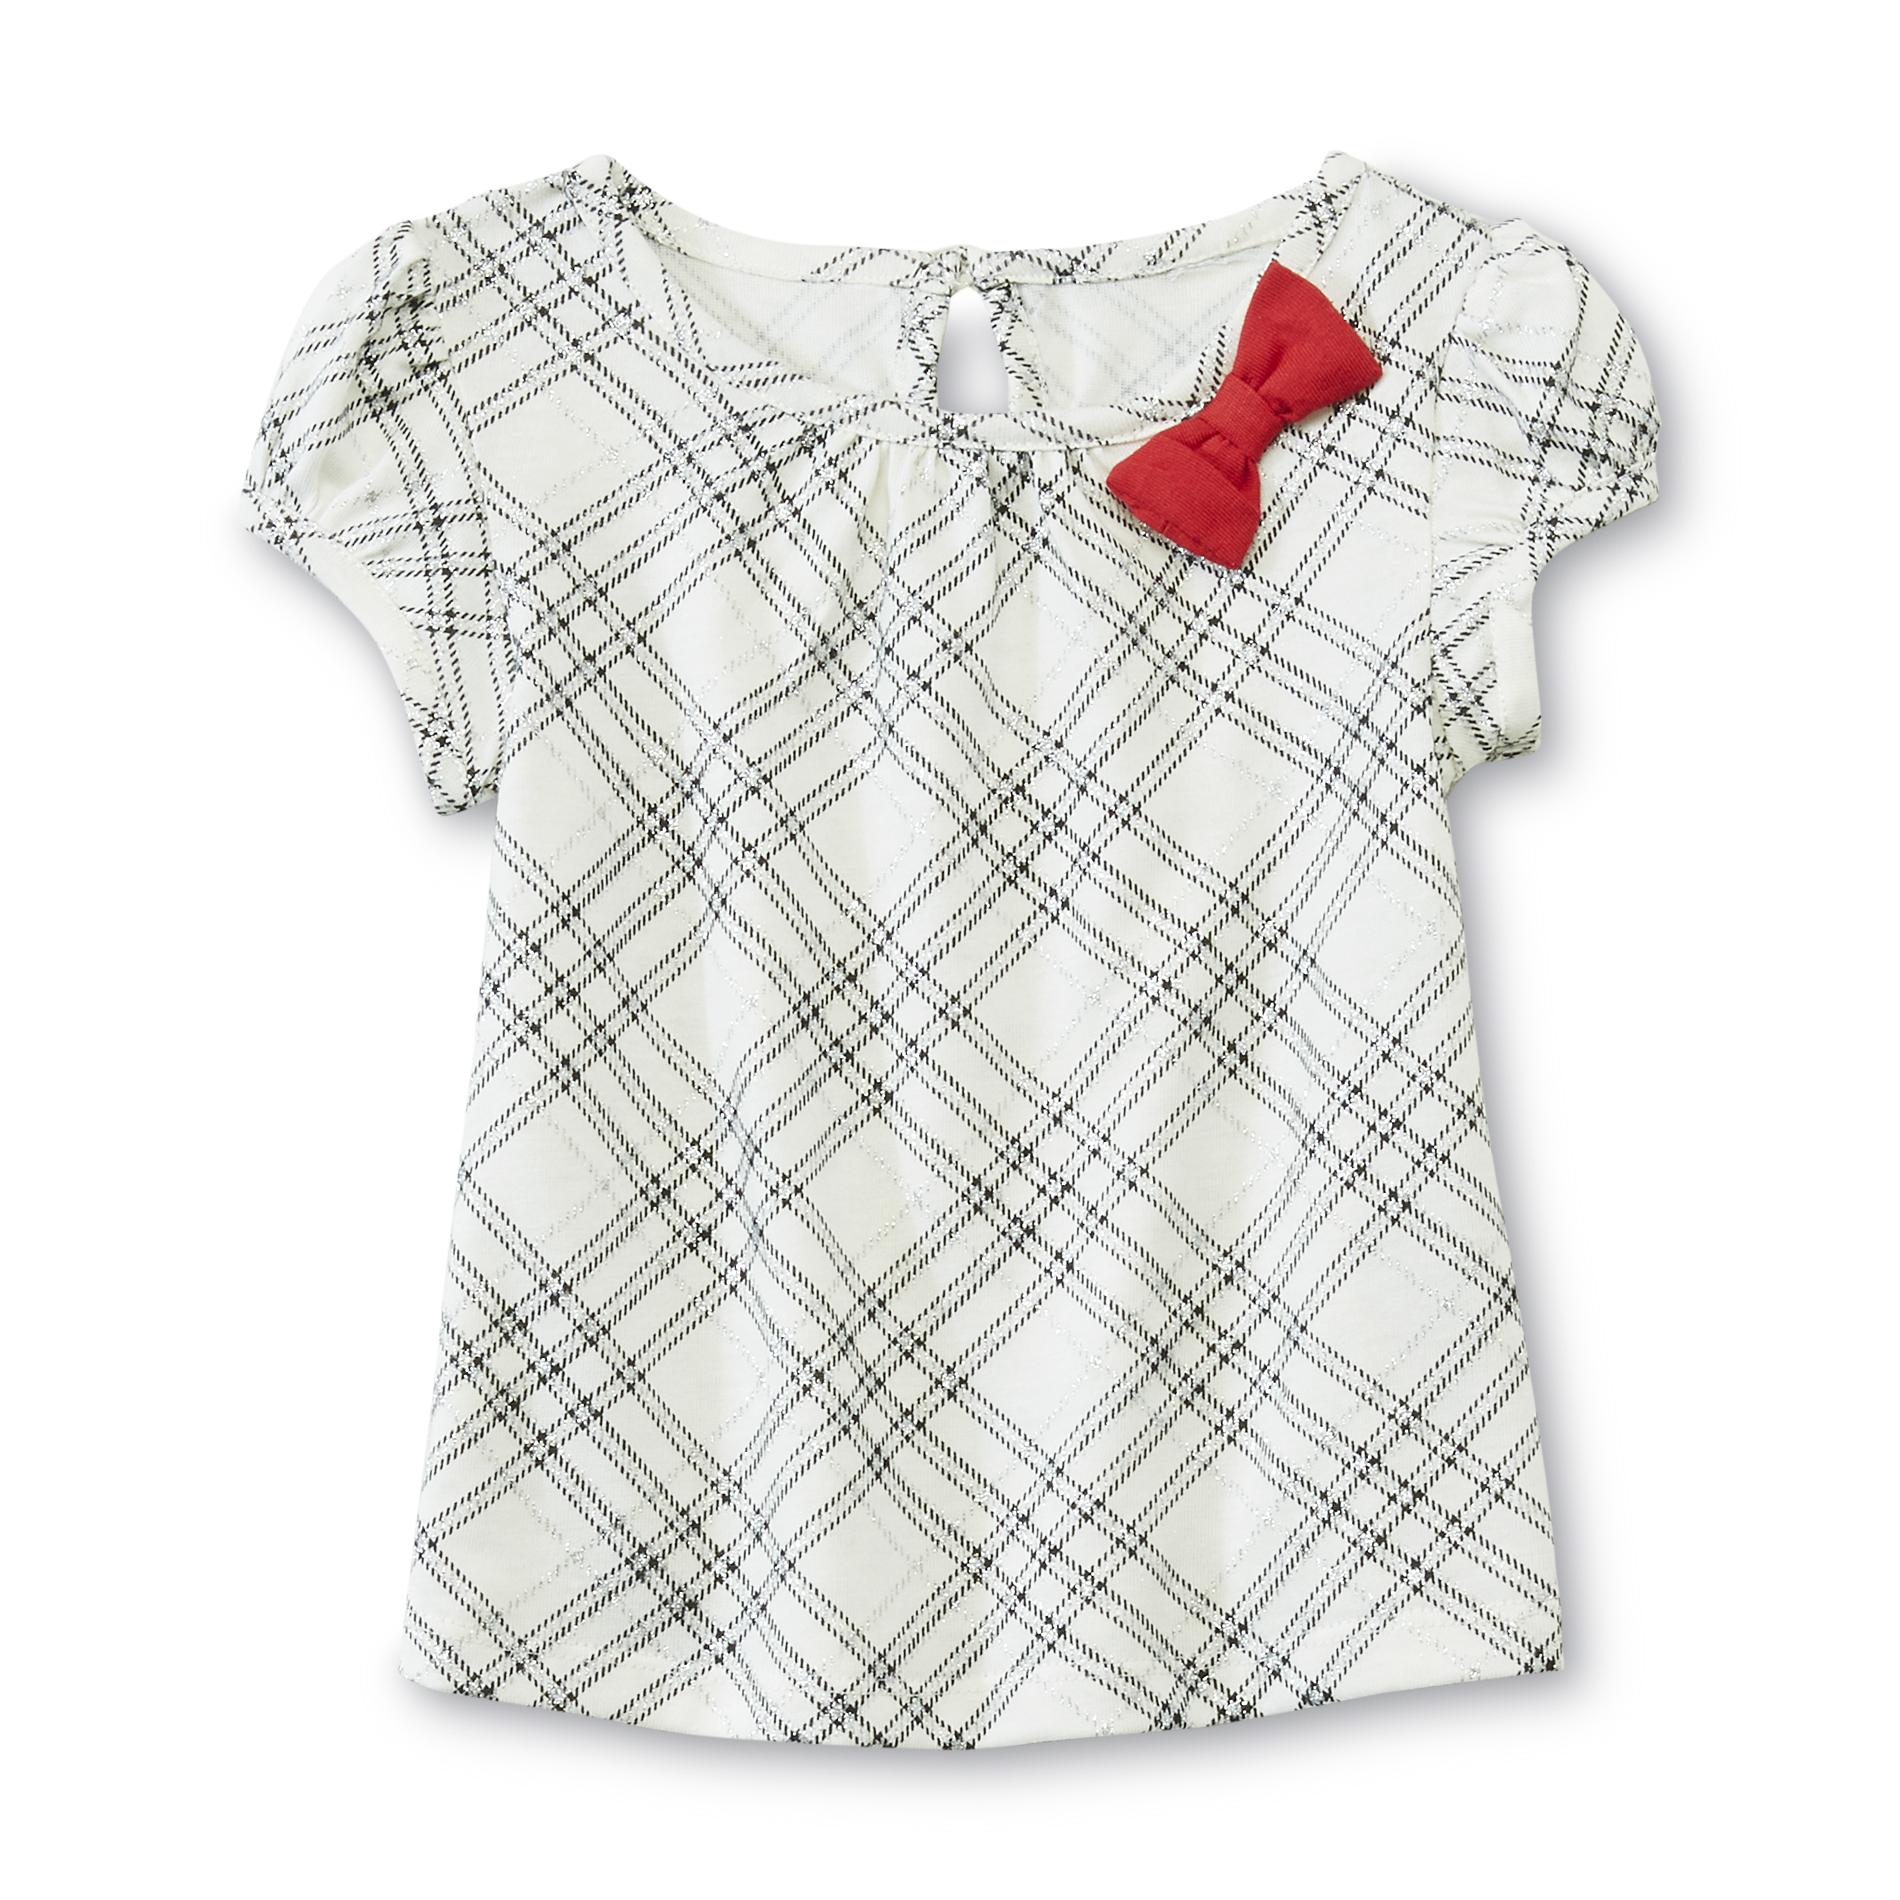 WonderKids Infant & Toddler Girl's Cap Sleeve Top - Plaid